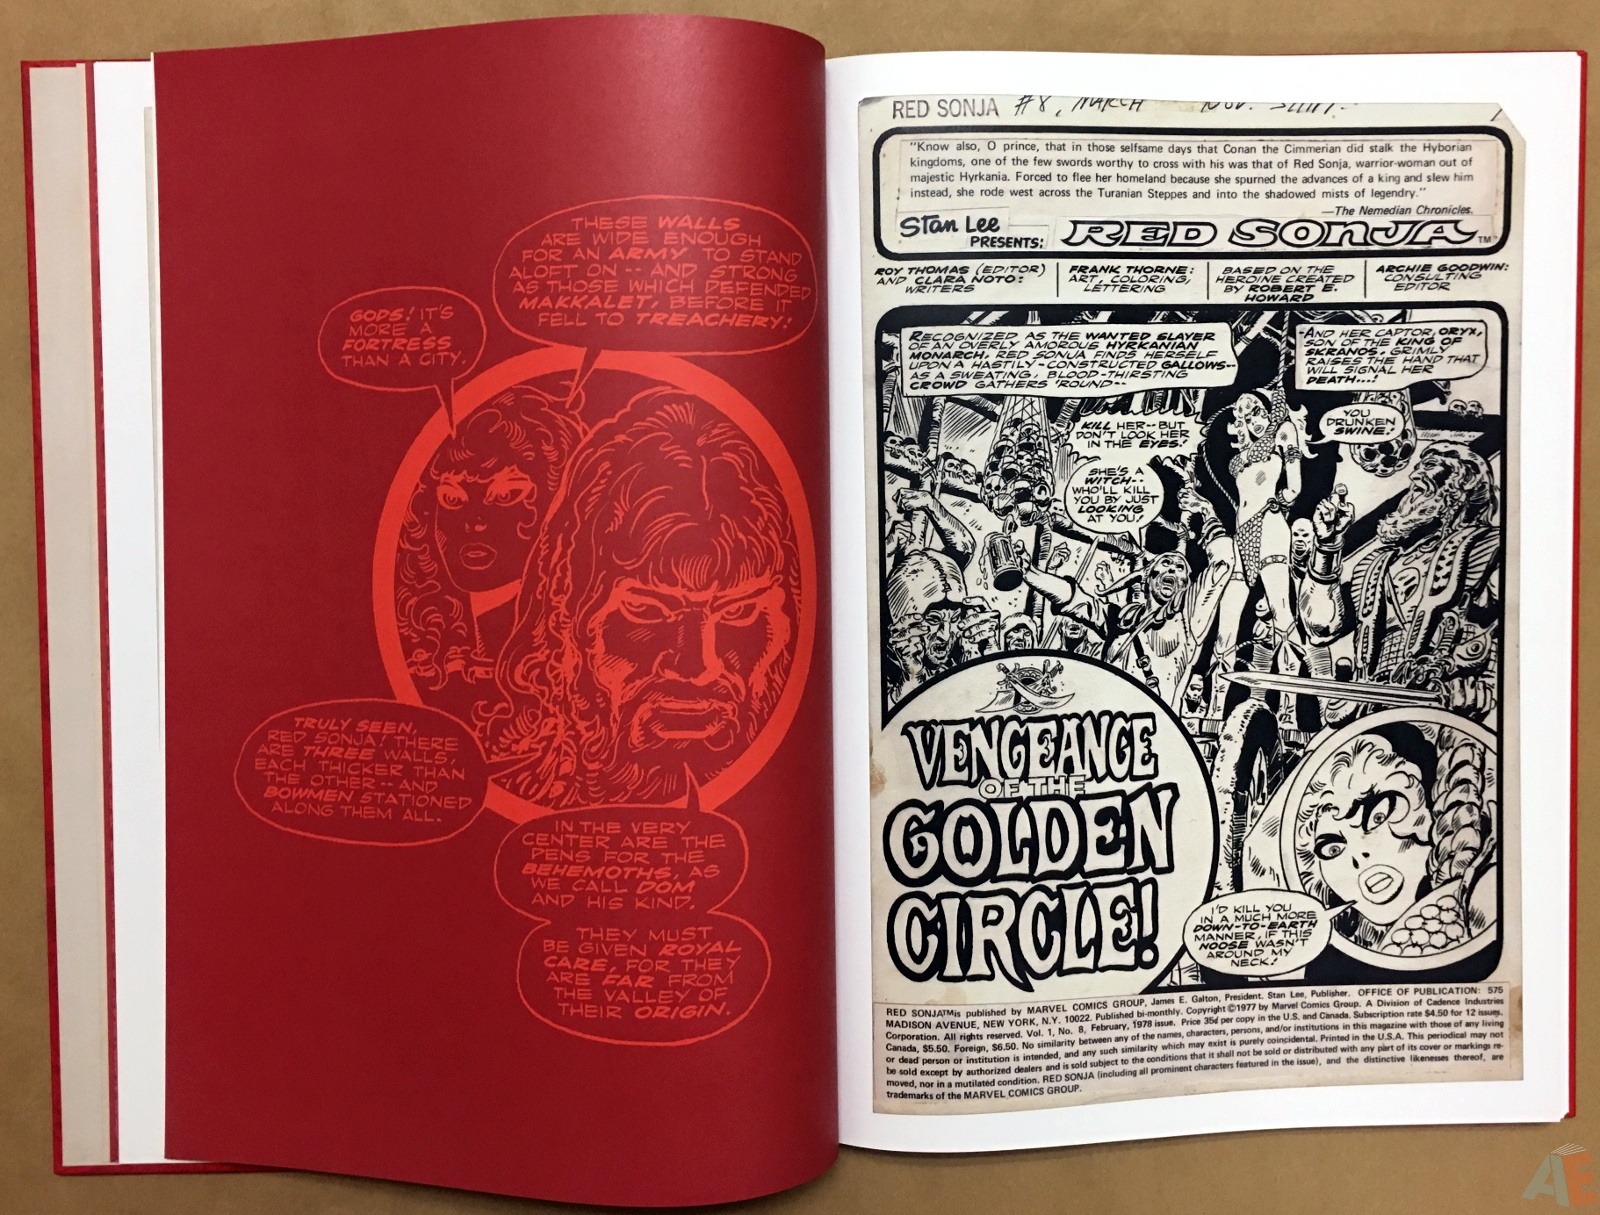 Frank Thorne’s Red Sonja Art Edition Volume 3